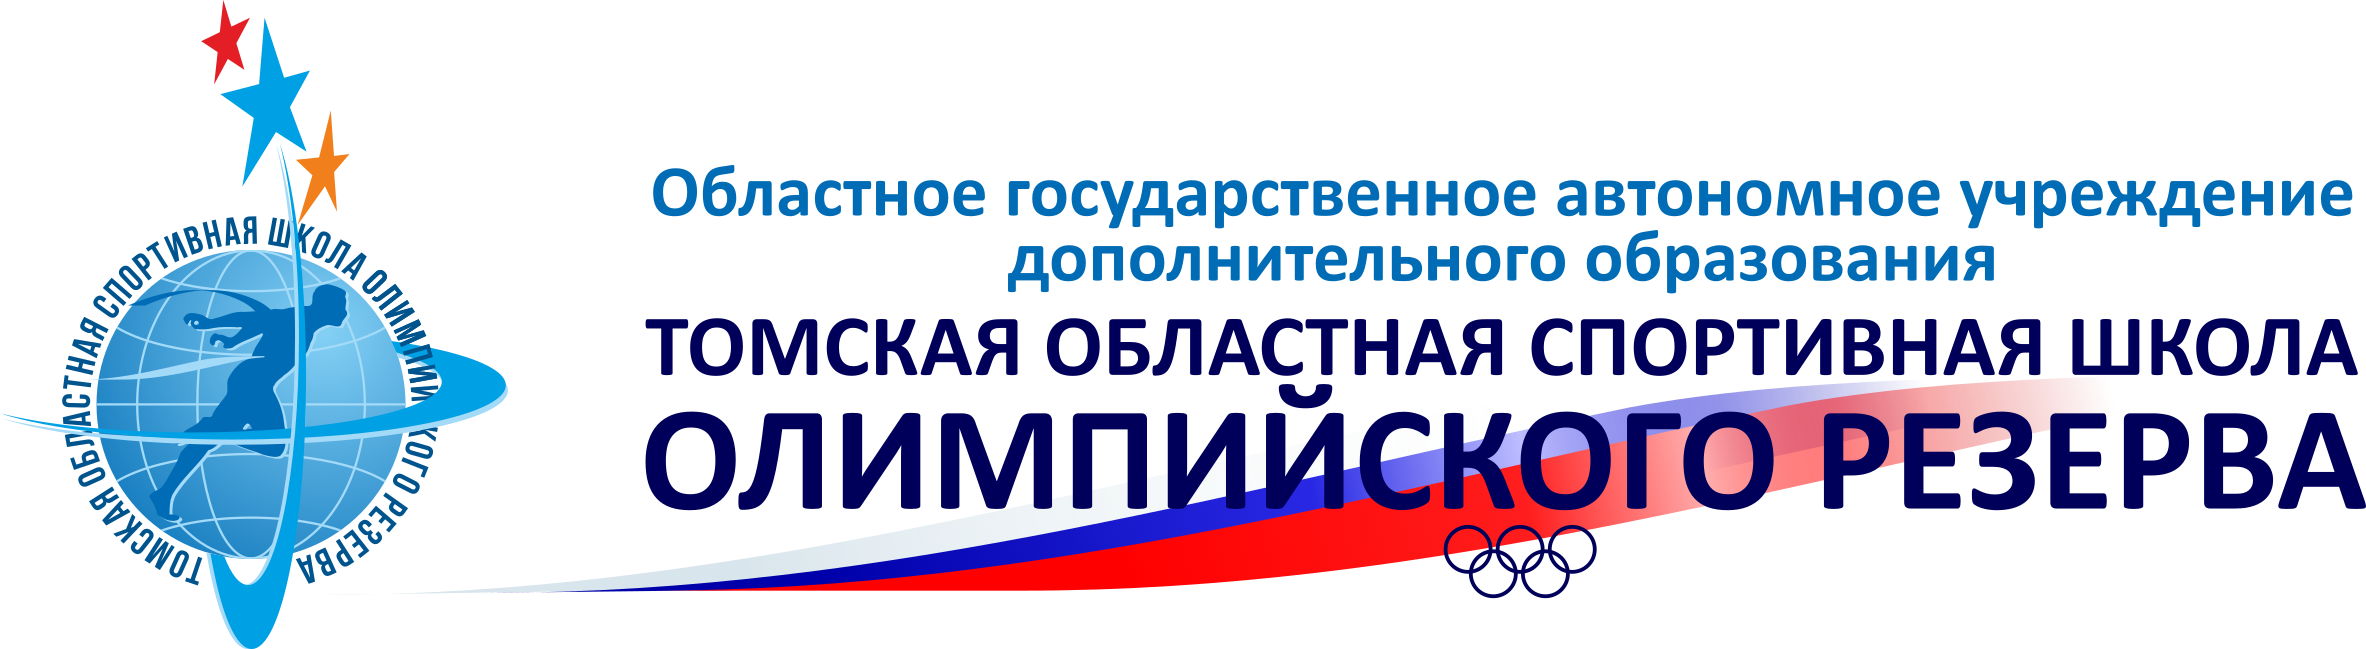 Томская областная спортивная школа олимпийского резерва